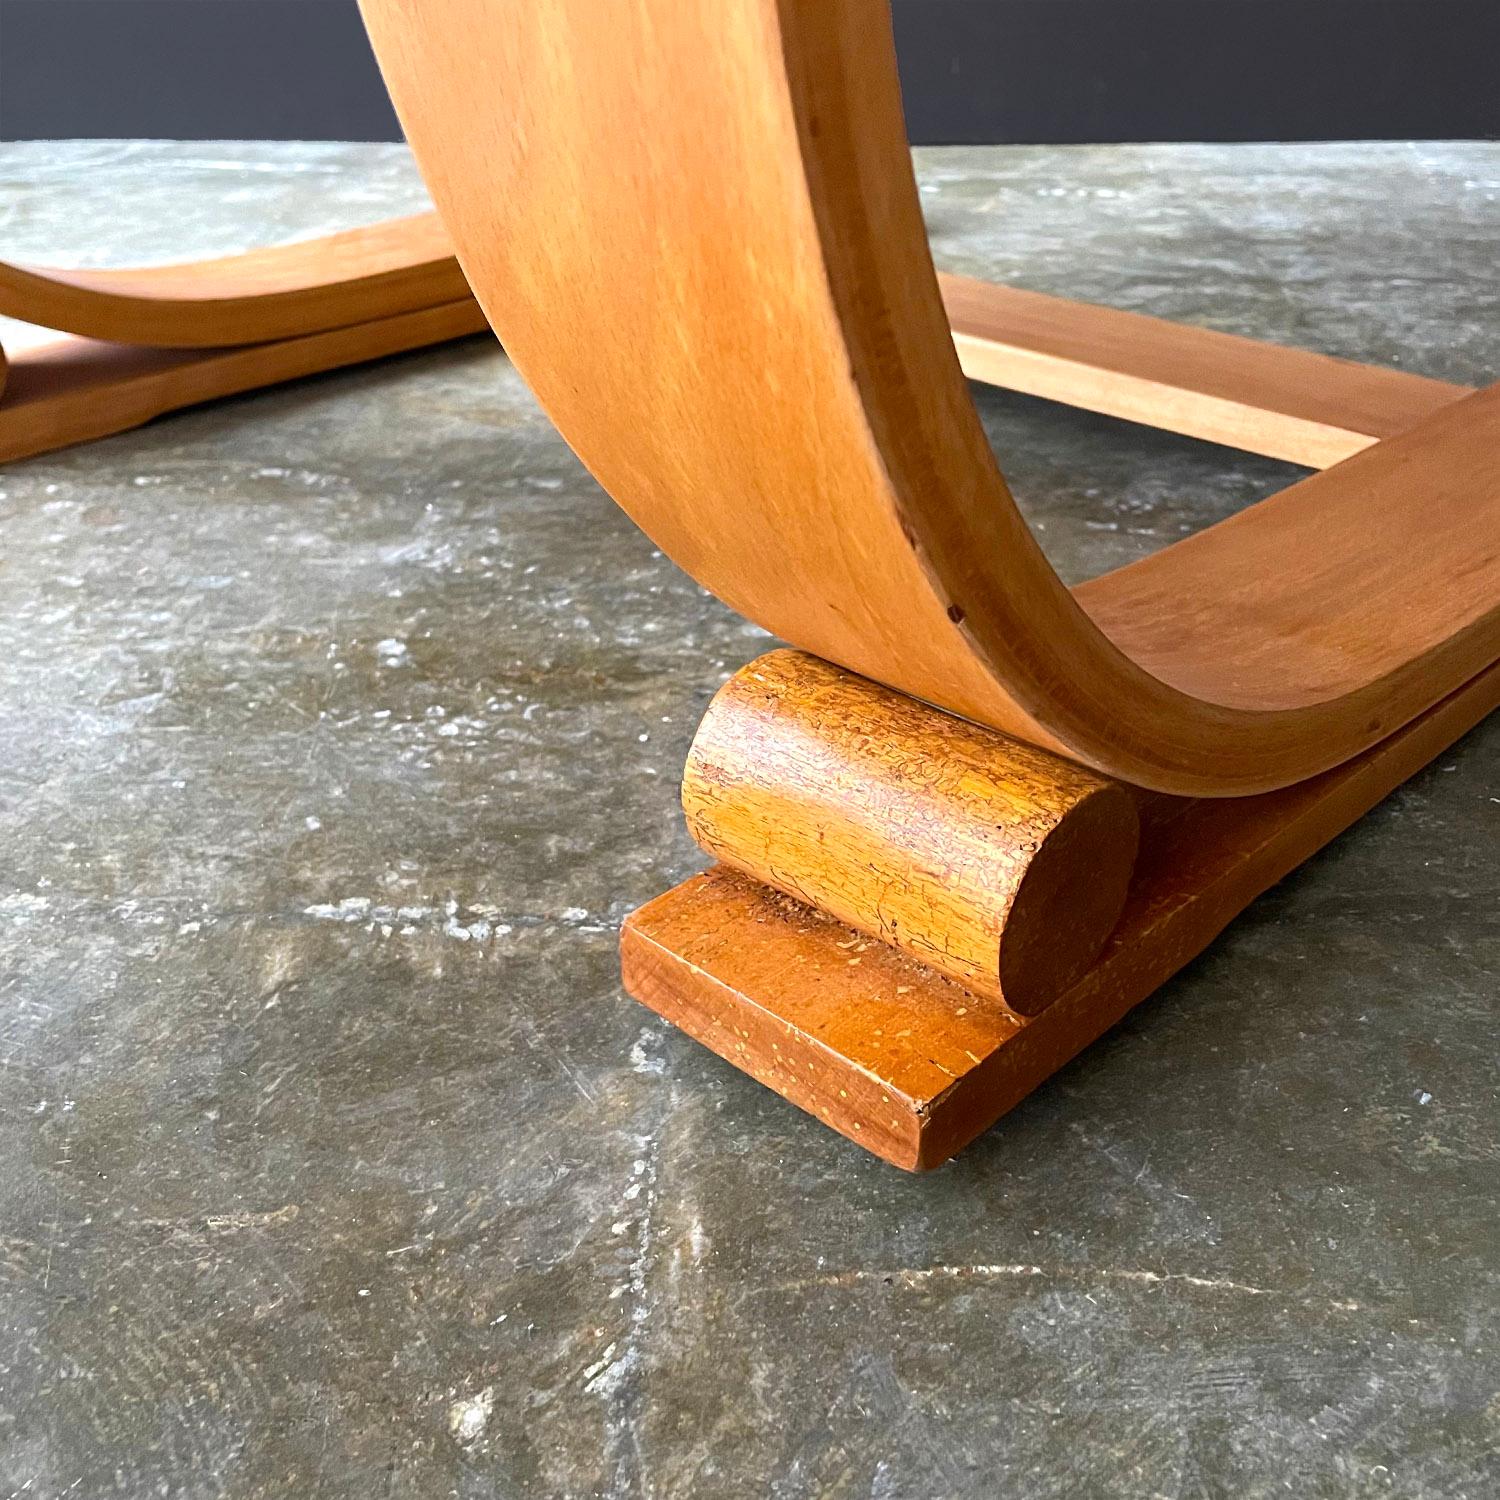 Wood Audoux Minet Chairs